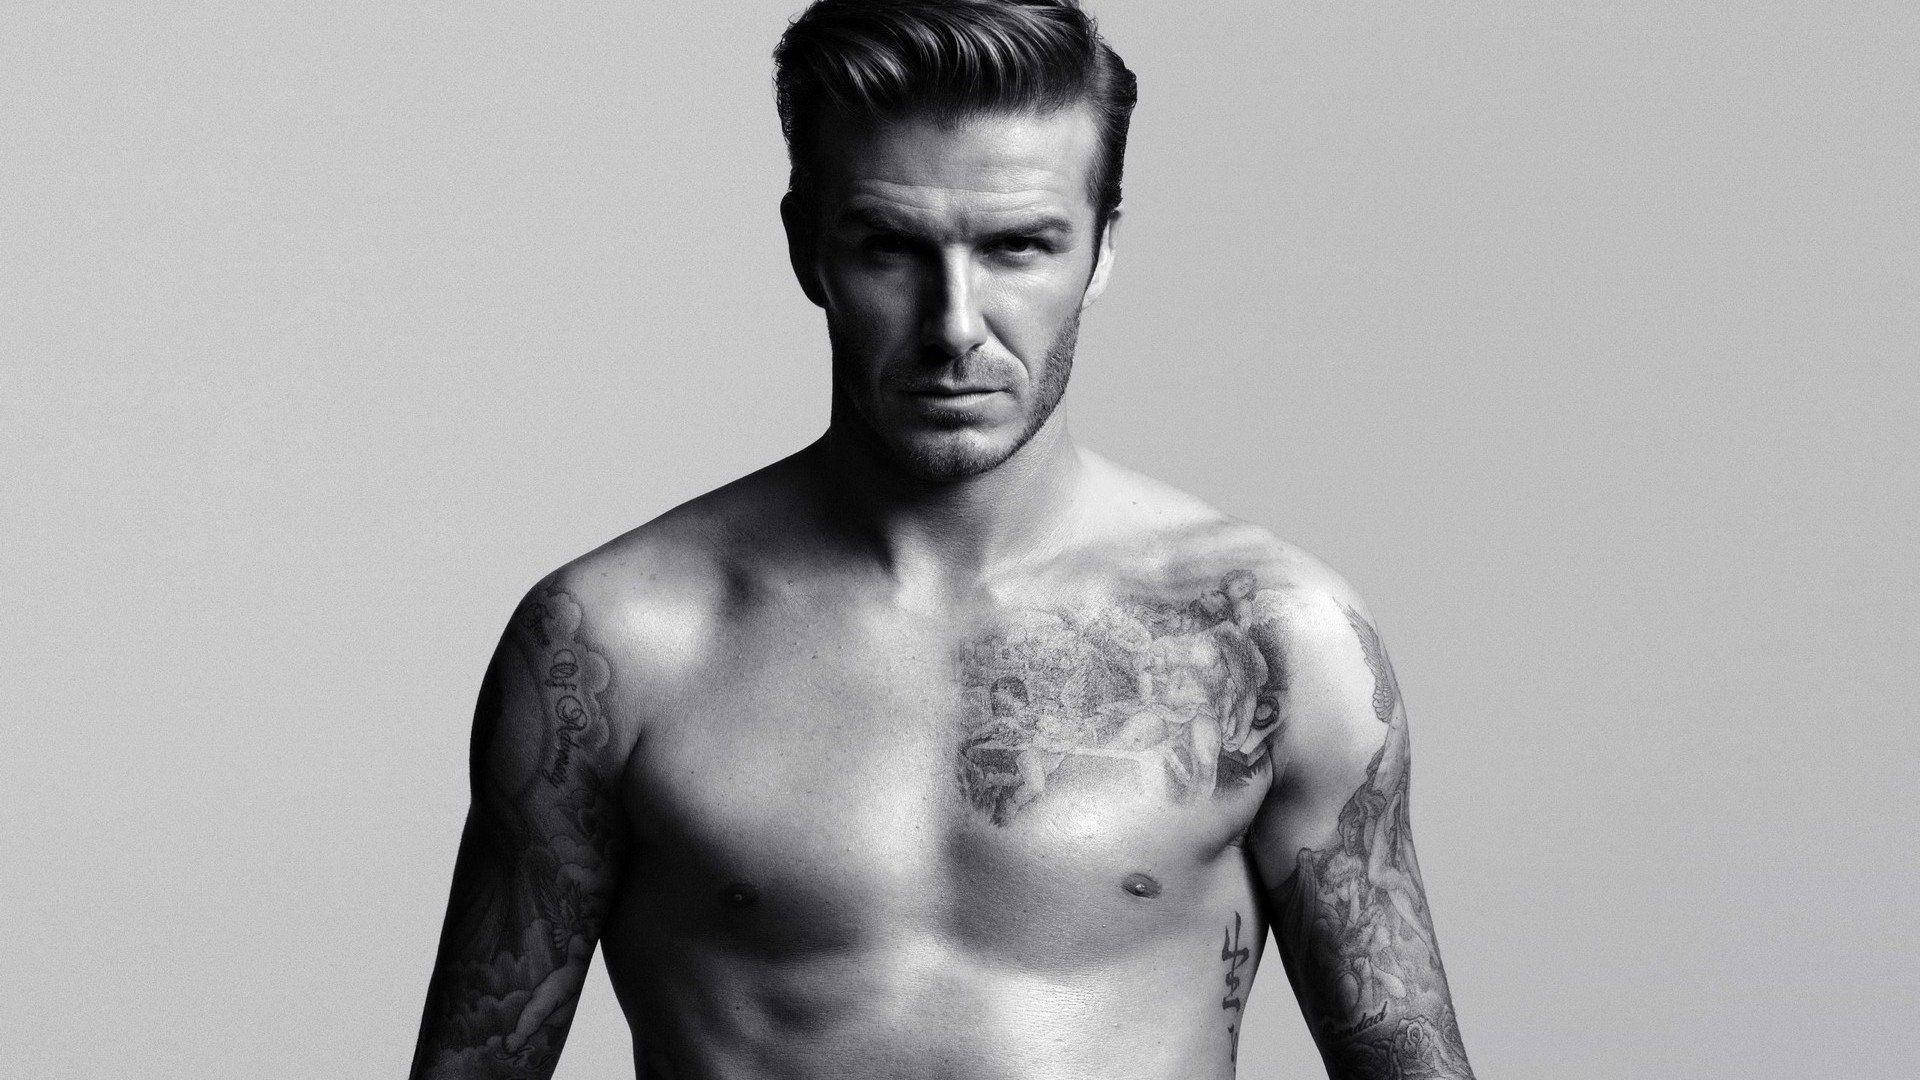 David Beckham Shirtless Portrait Background